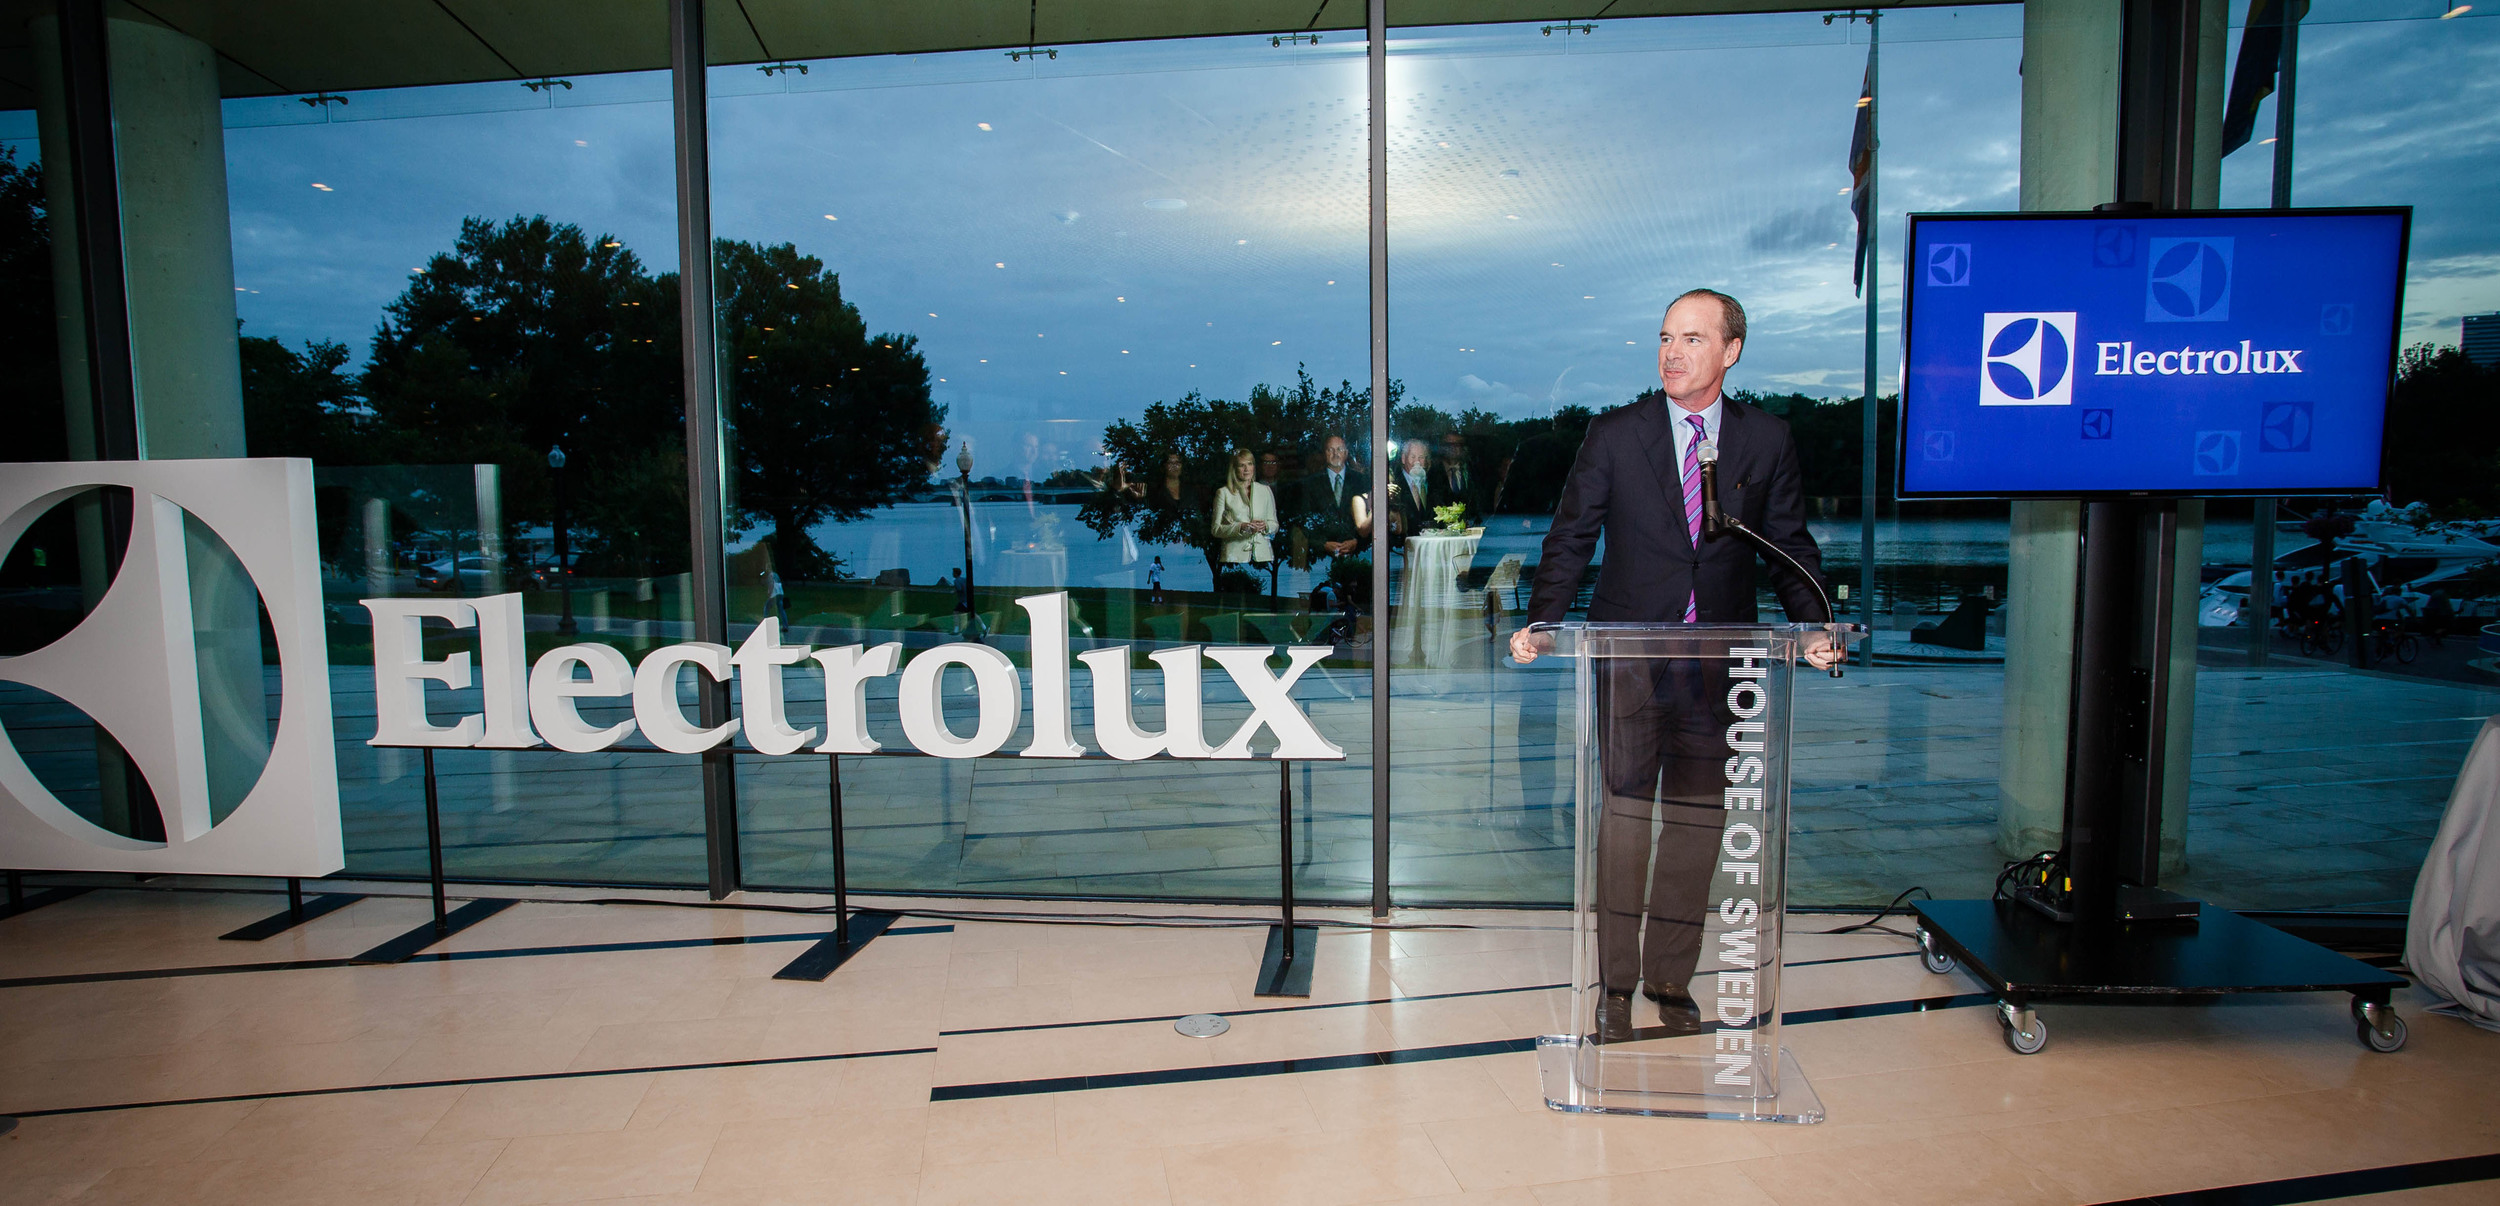 Keith McLoughlin, former President & CEO of Electrolux